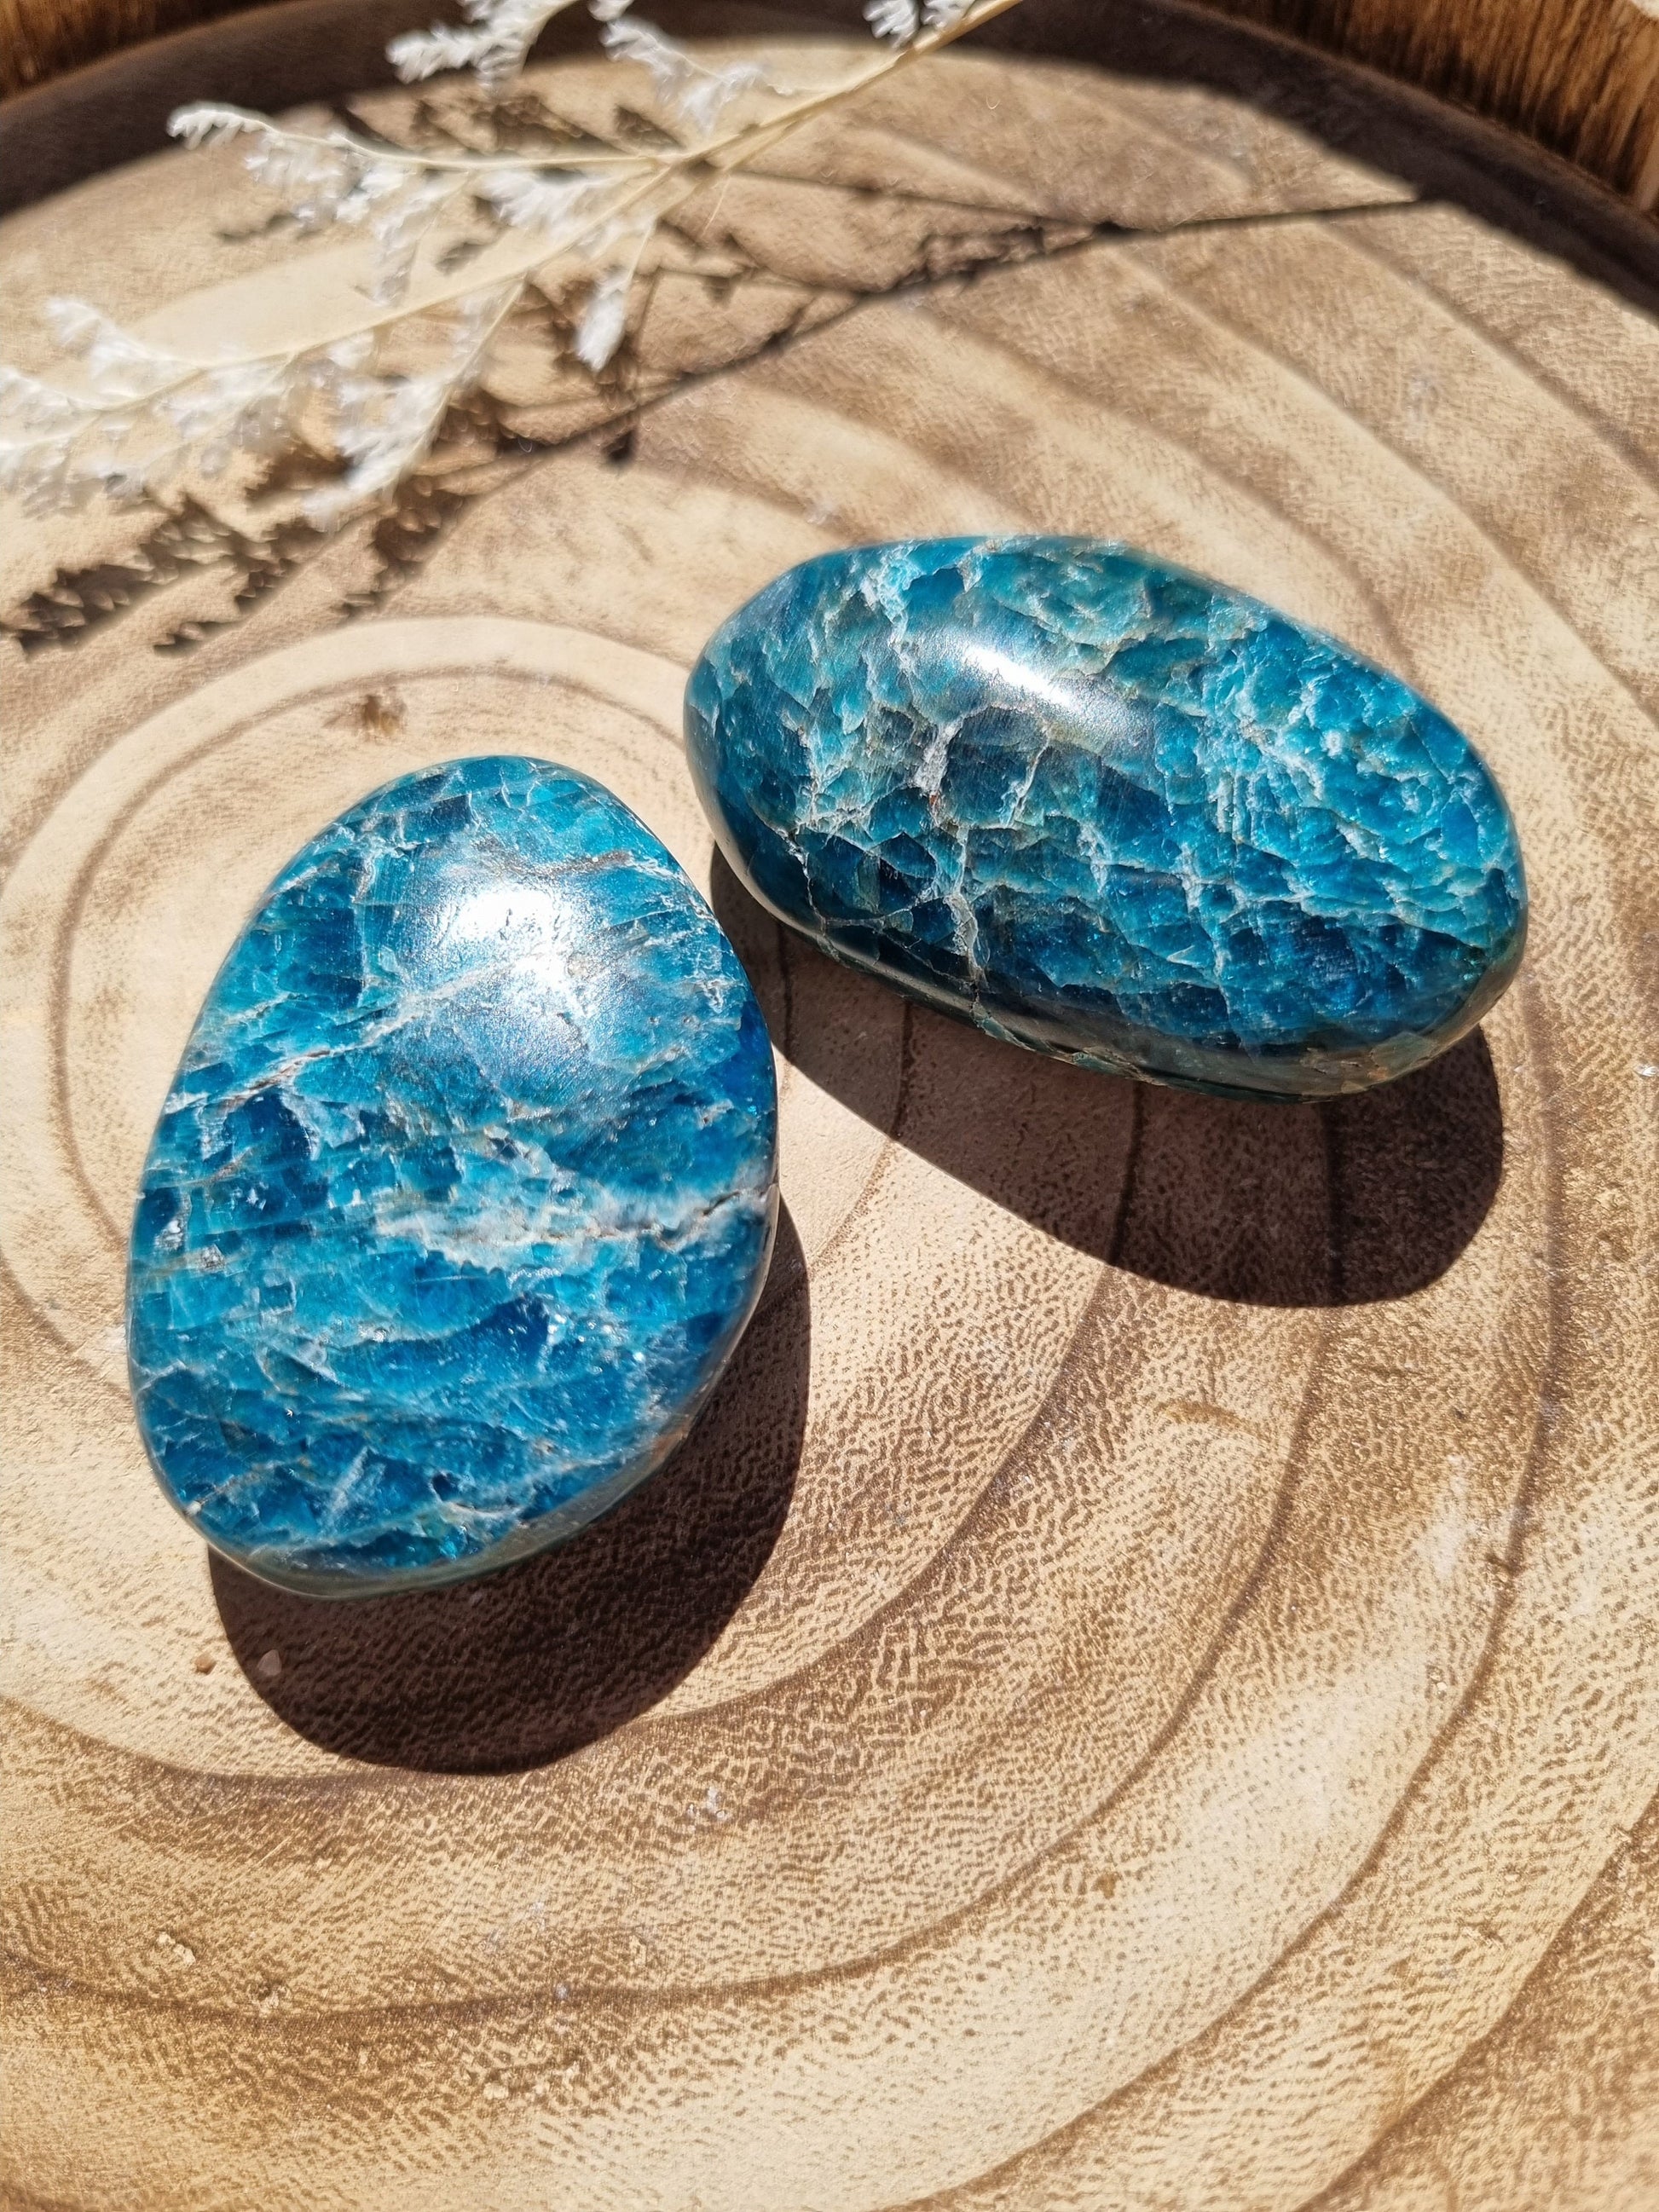 Blue appatite palm stones